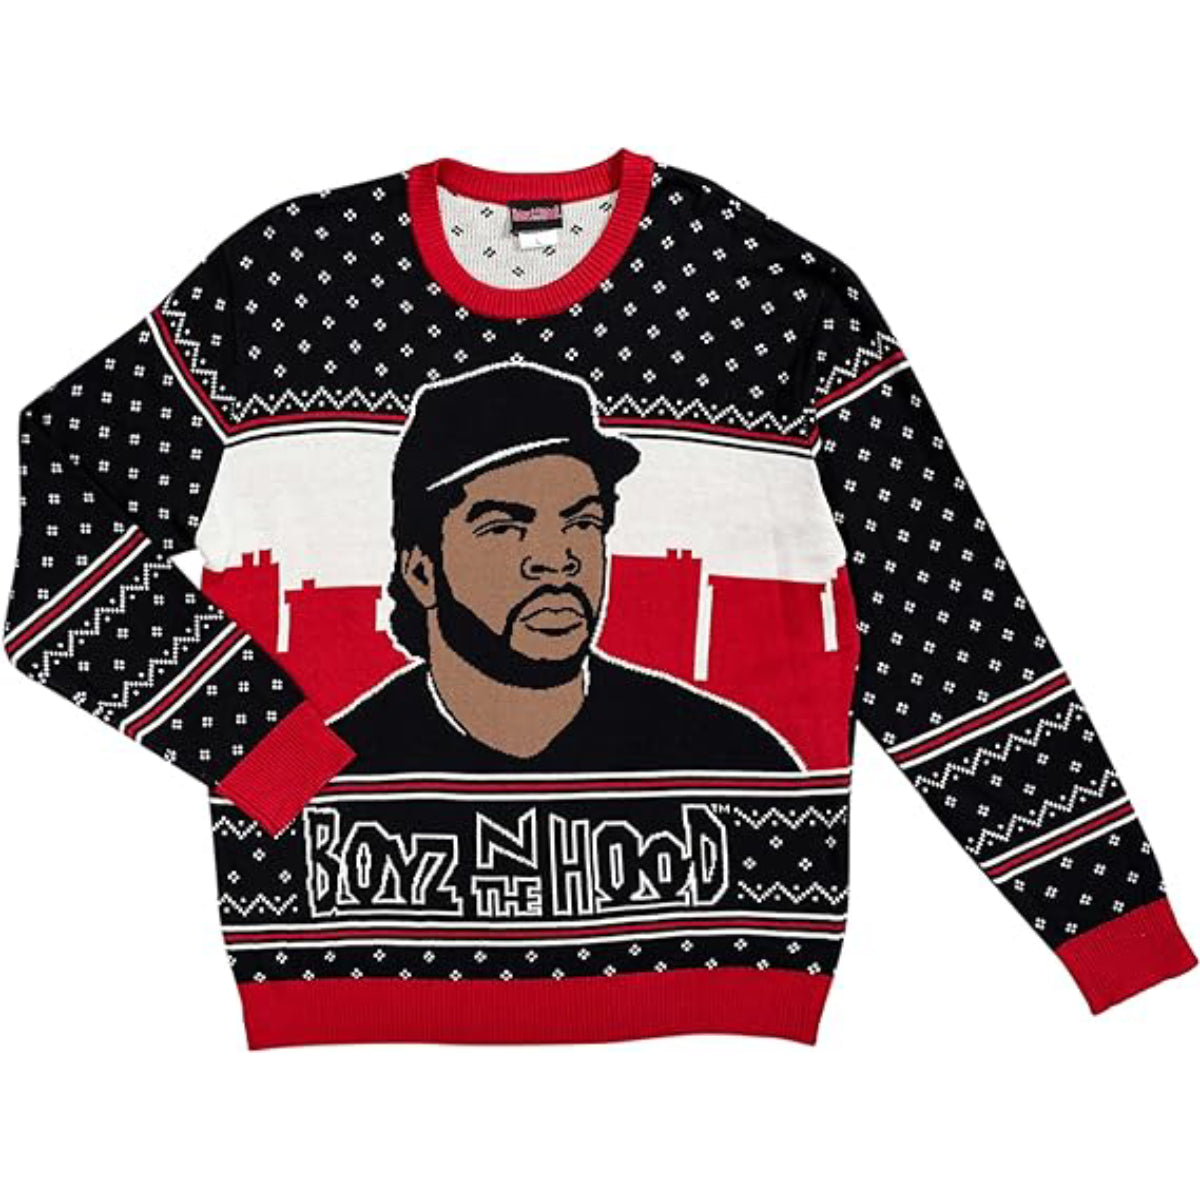 Boyz n the Hood "Doughboy" Ugly Christmas Sweater